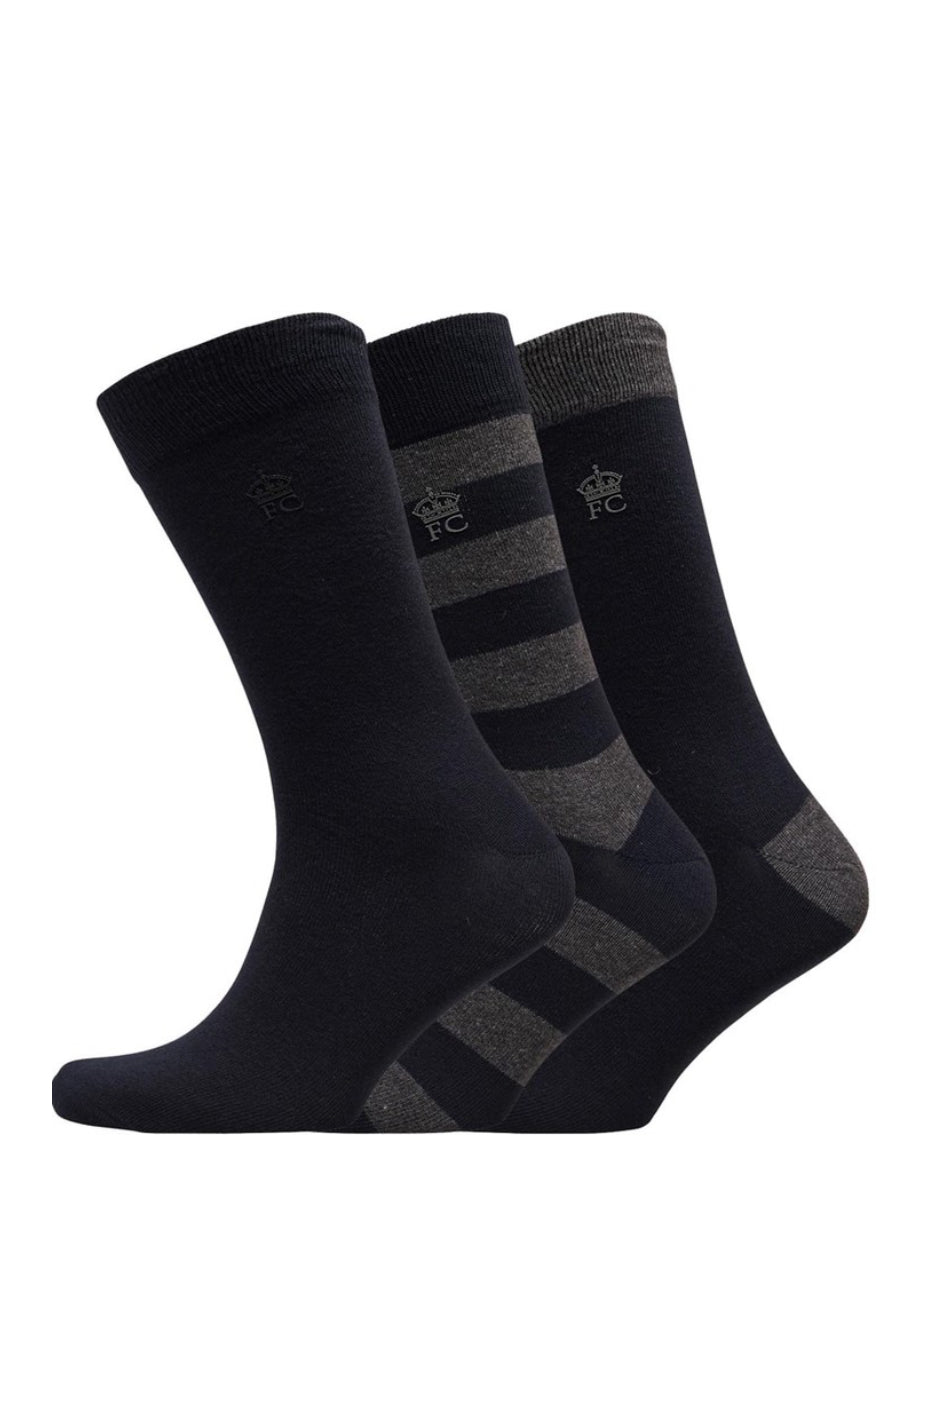 French Connection Men's Argyle Socks